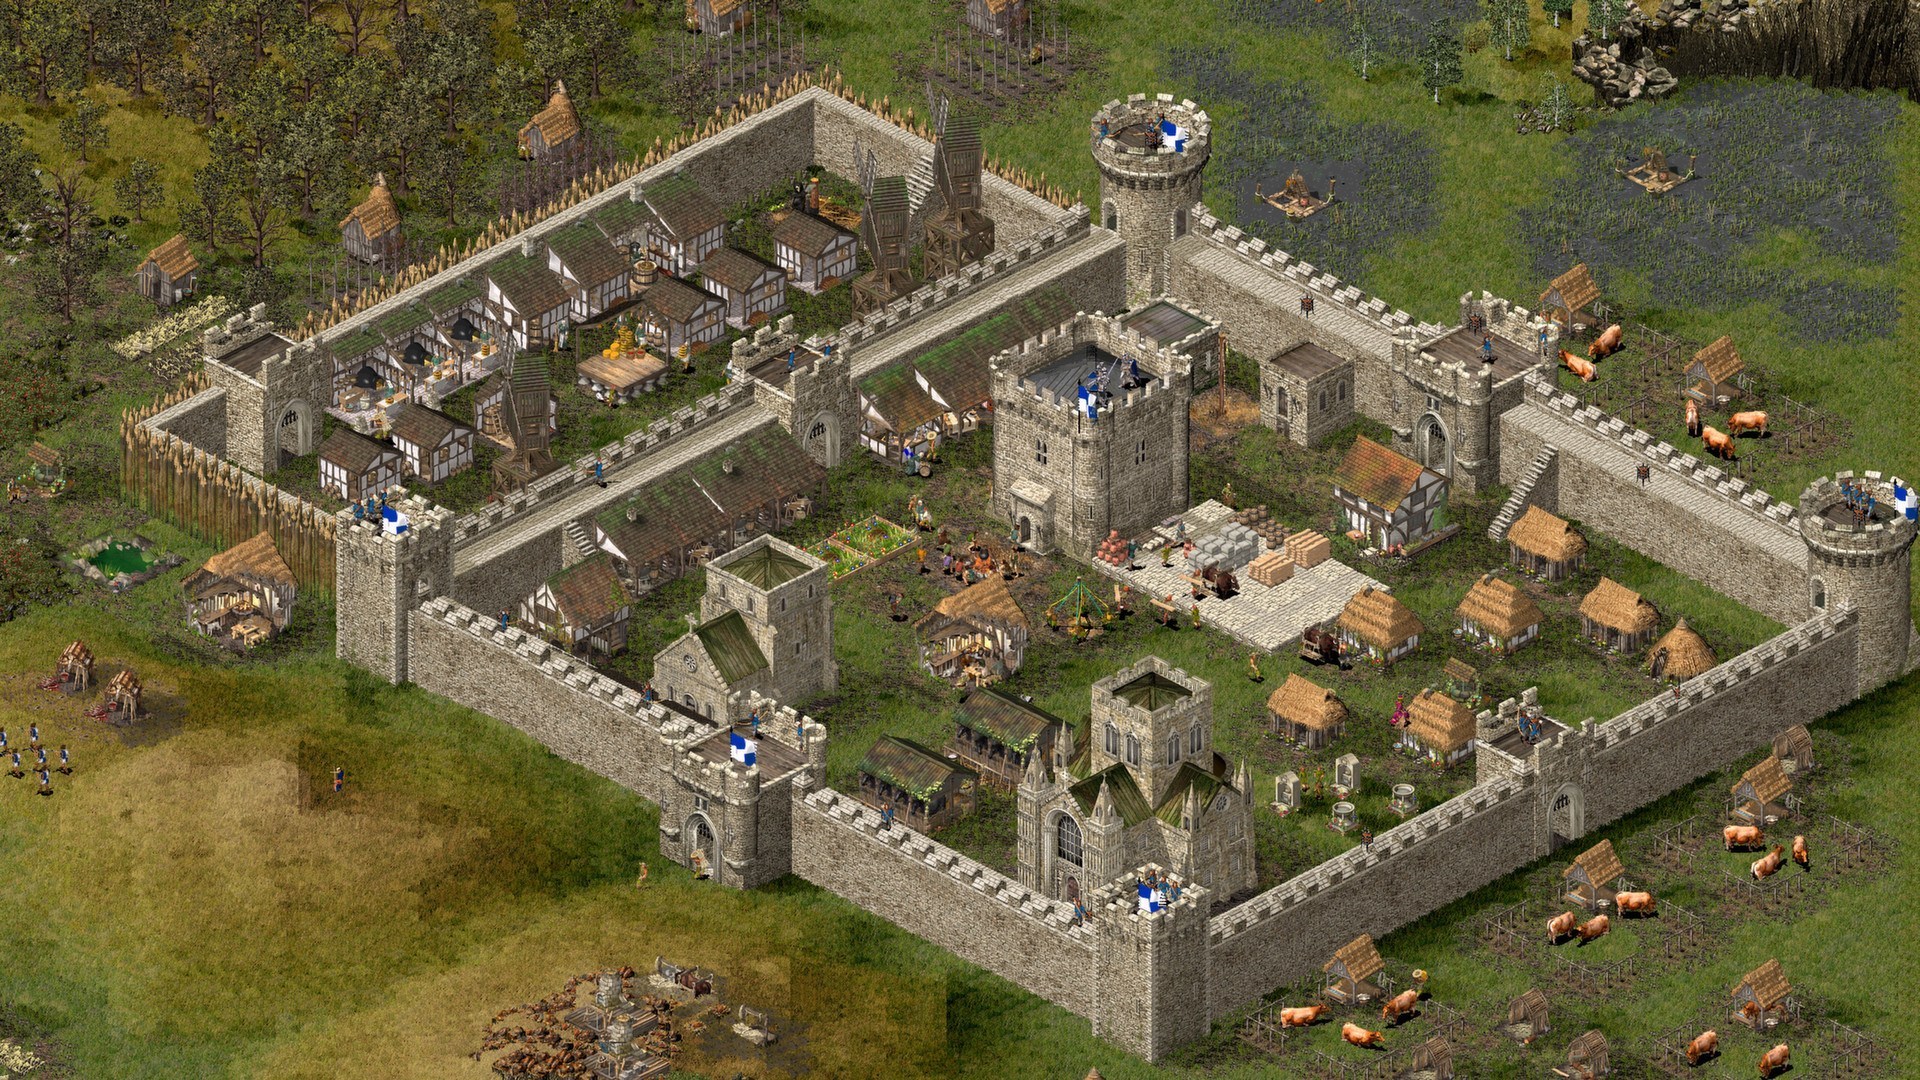 stronghold kingdoms castle sim mod apk